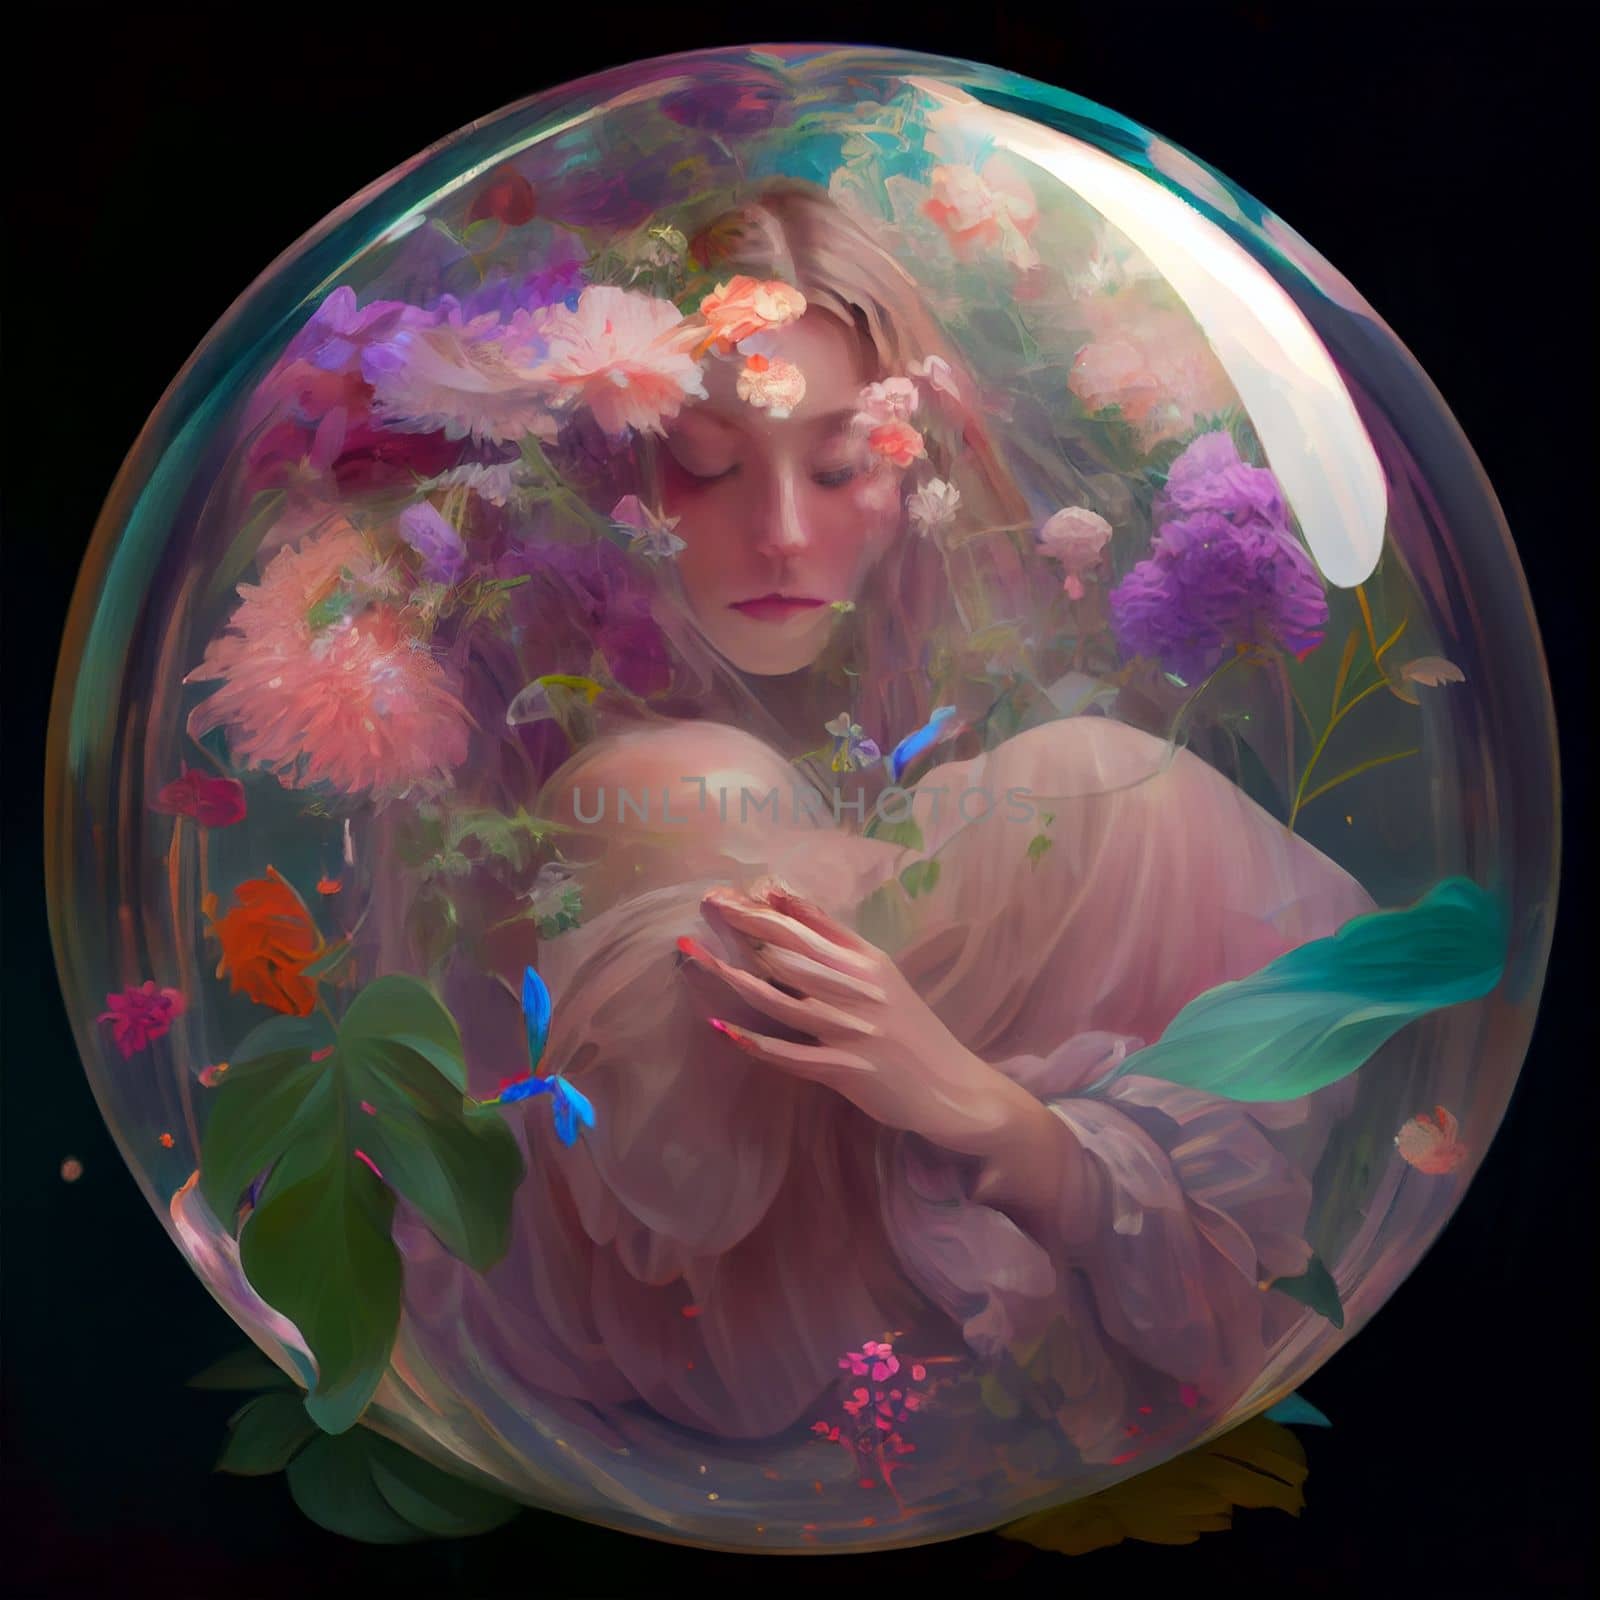 sleeping girl among flowers in a round glass bowl by studiodav